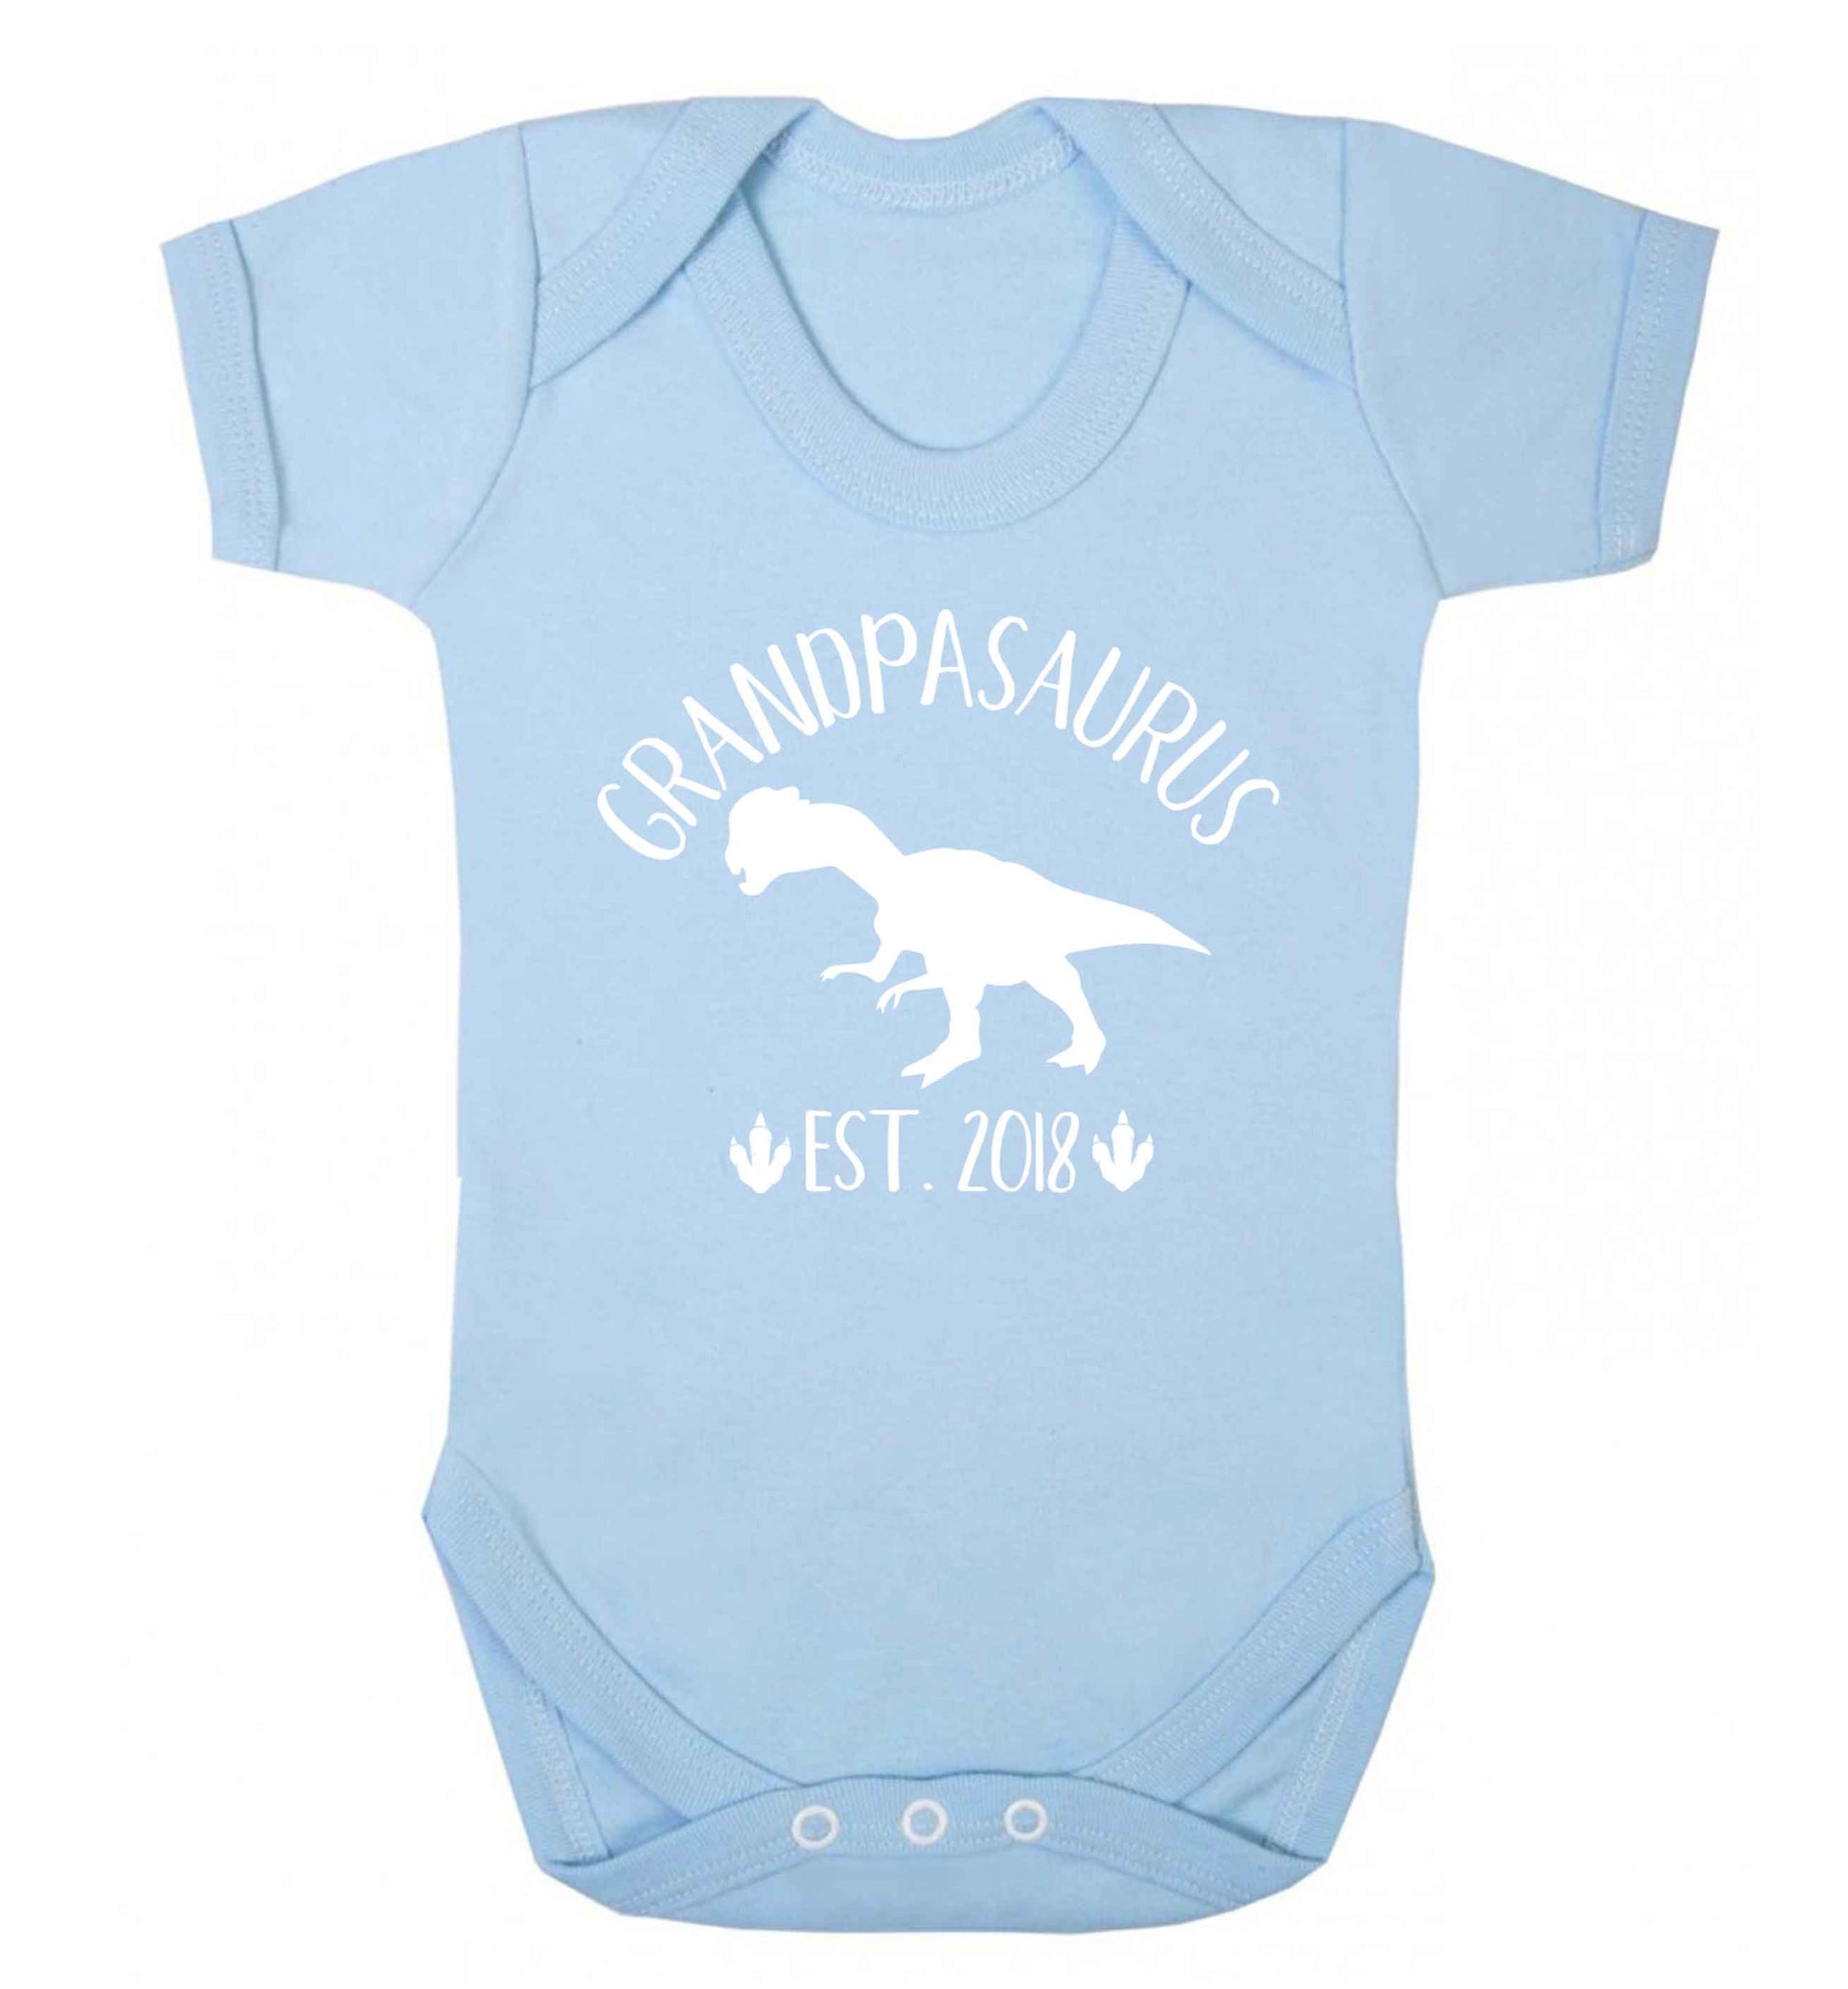 Personalised grandpasaurus since (custom date) Baby Vest pale blue 18-24 months